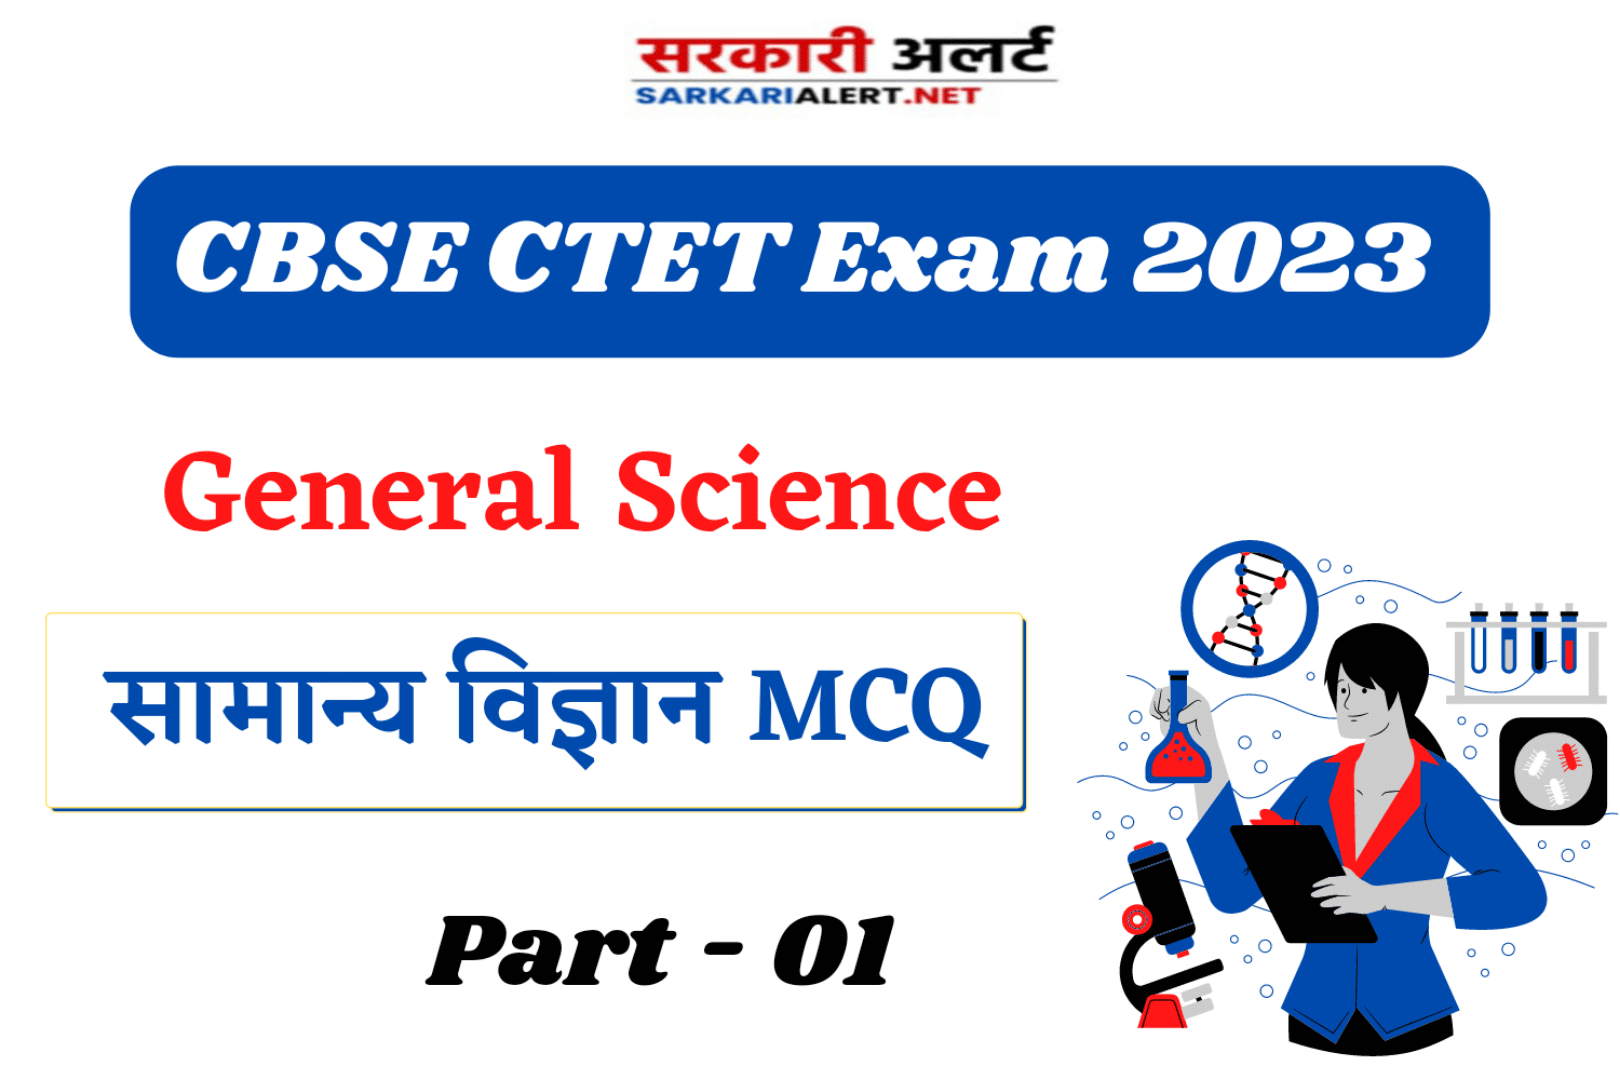 CBSE CTET Exam 2023 Science MCQ - 01 | सामान्य विज्ञान के महत्वपूर्ण प्रश्न